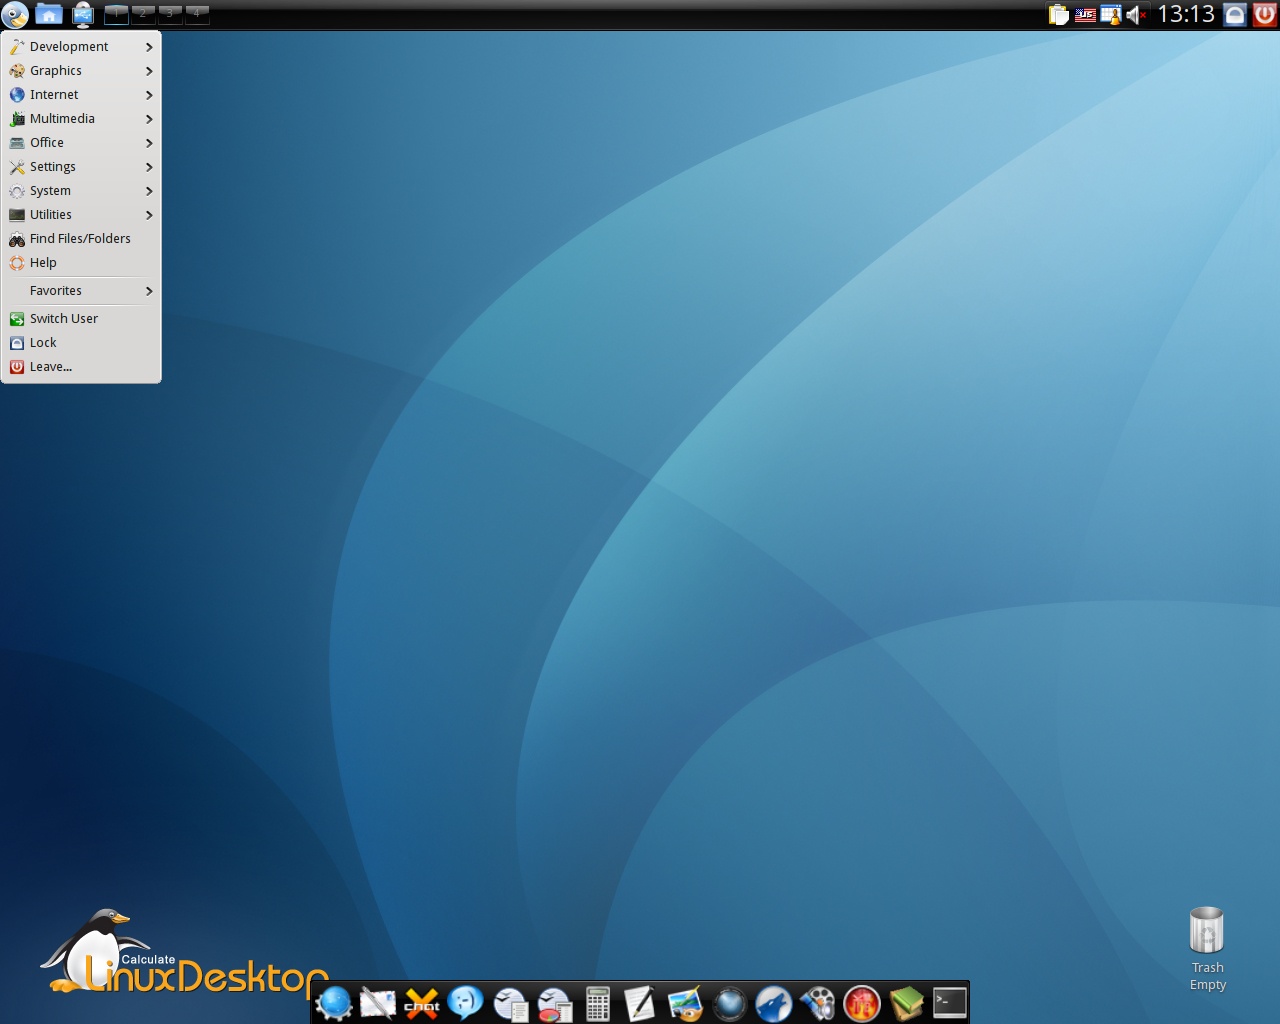 Download Calculate Linux Desktop KDE 20